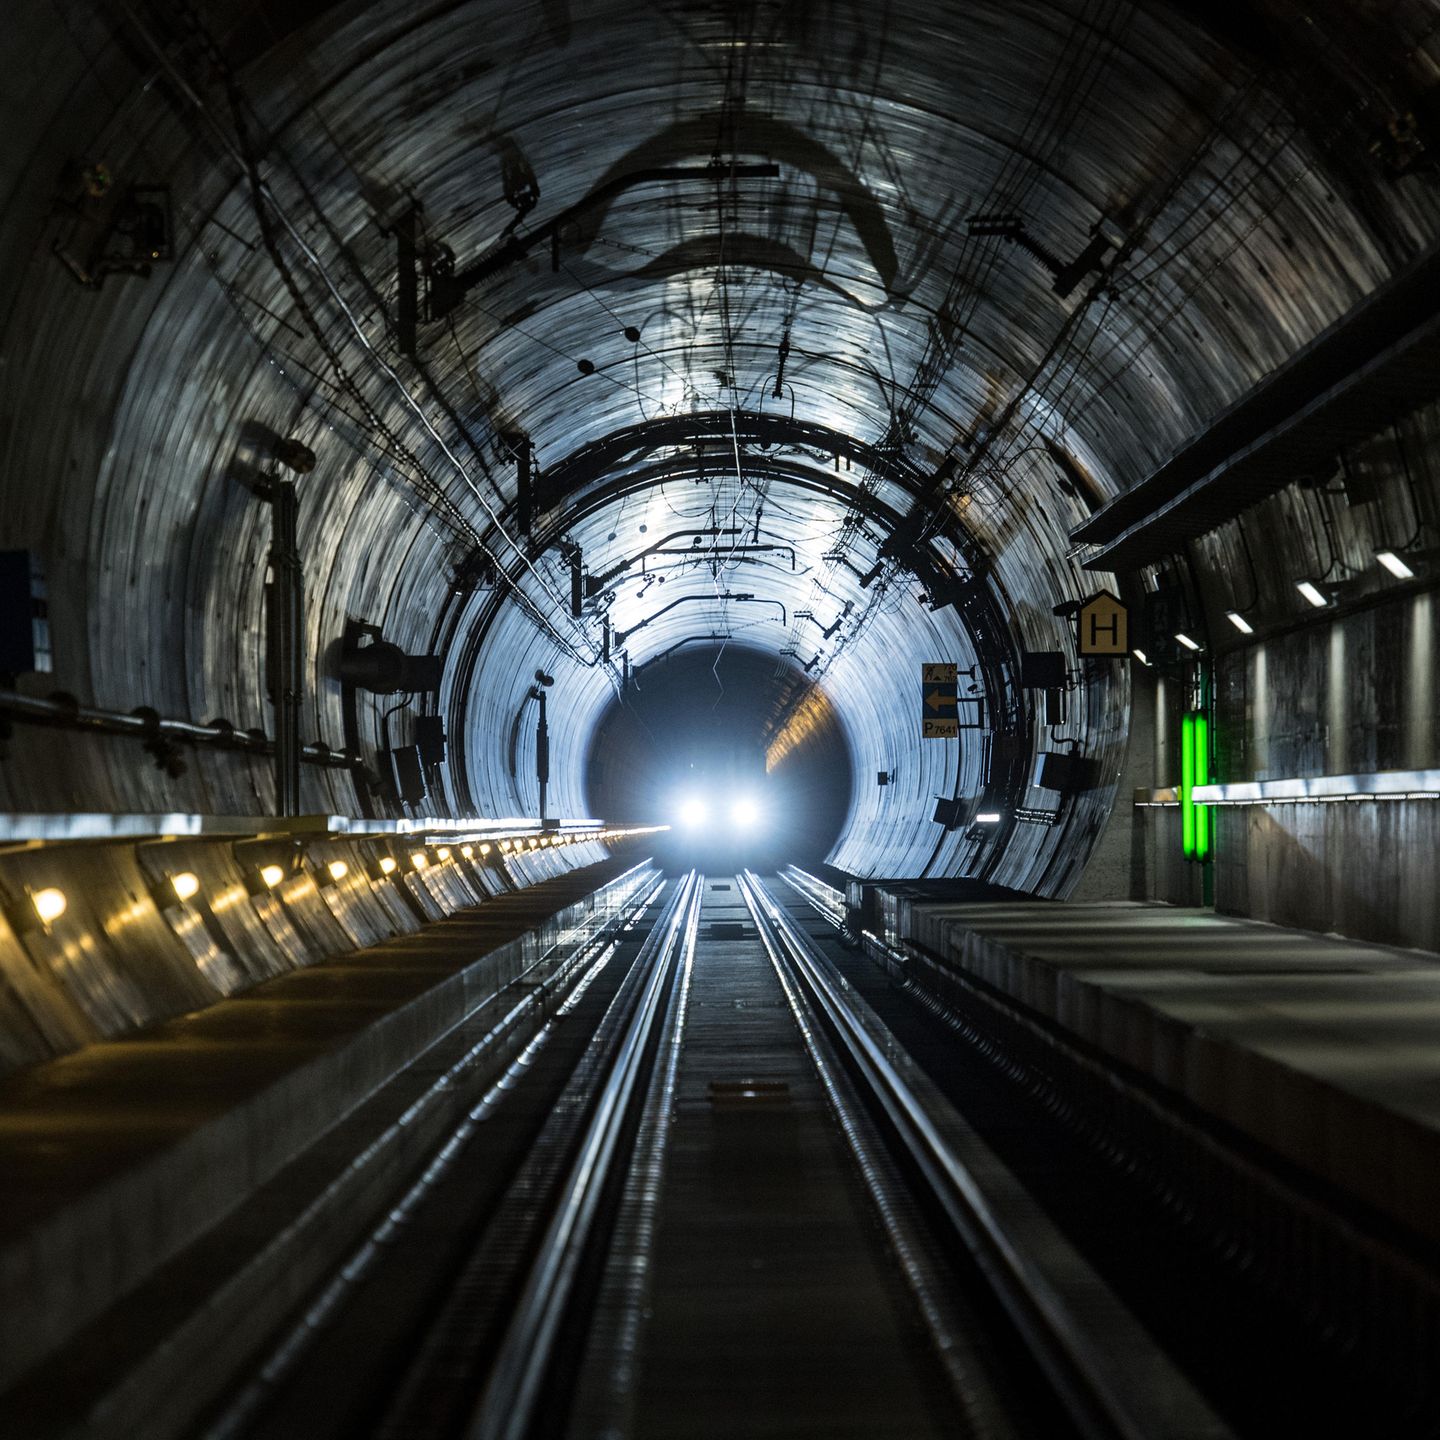 schweizer mega projekt ein 450 kilometer langer tunnel stern de